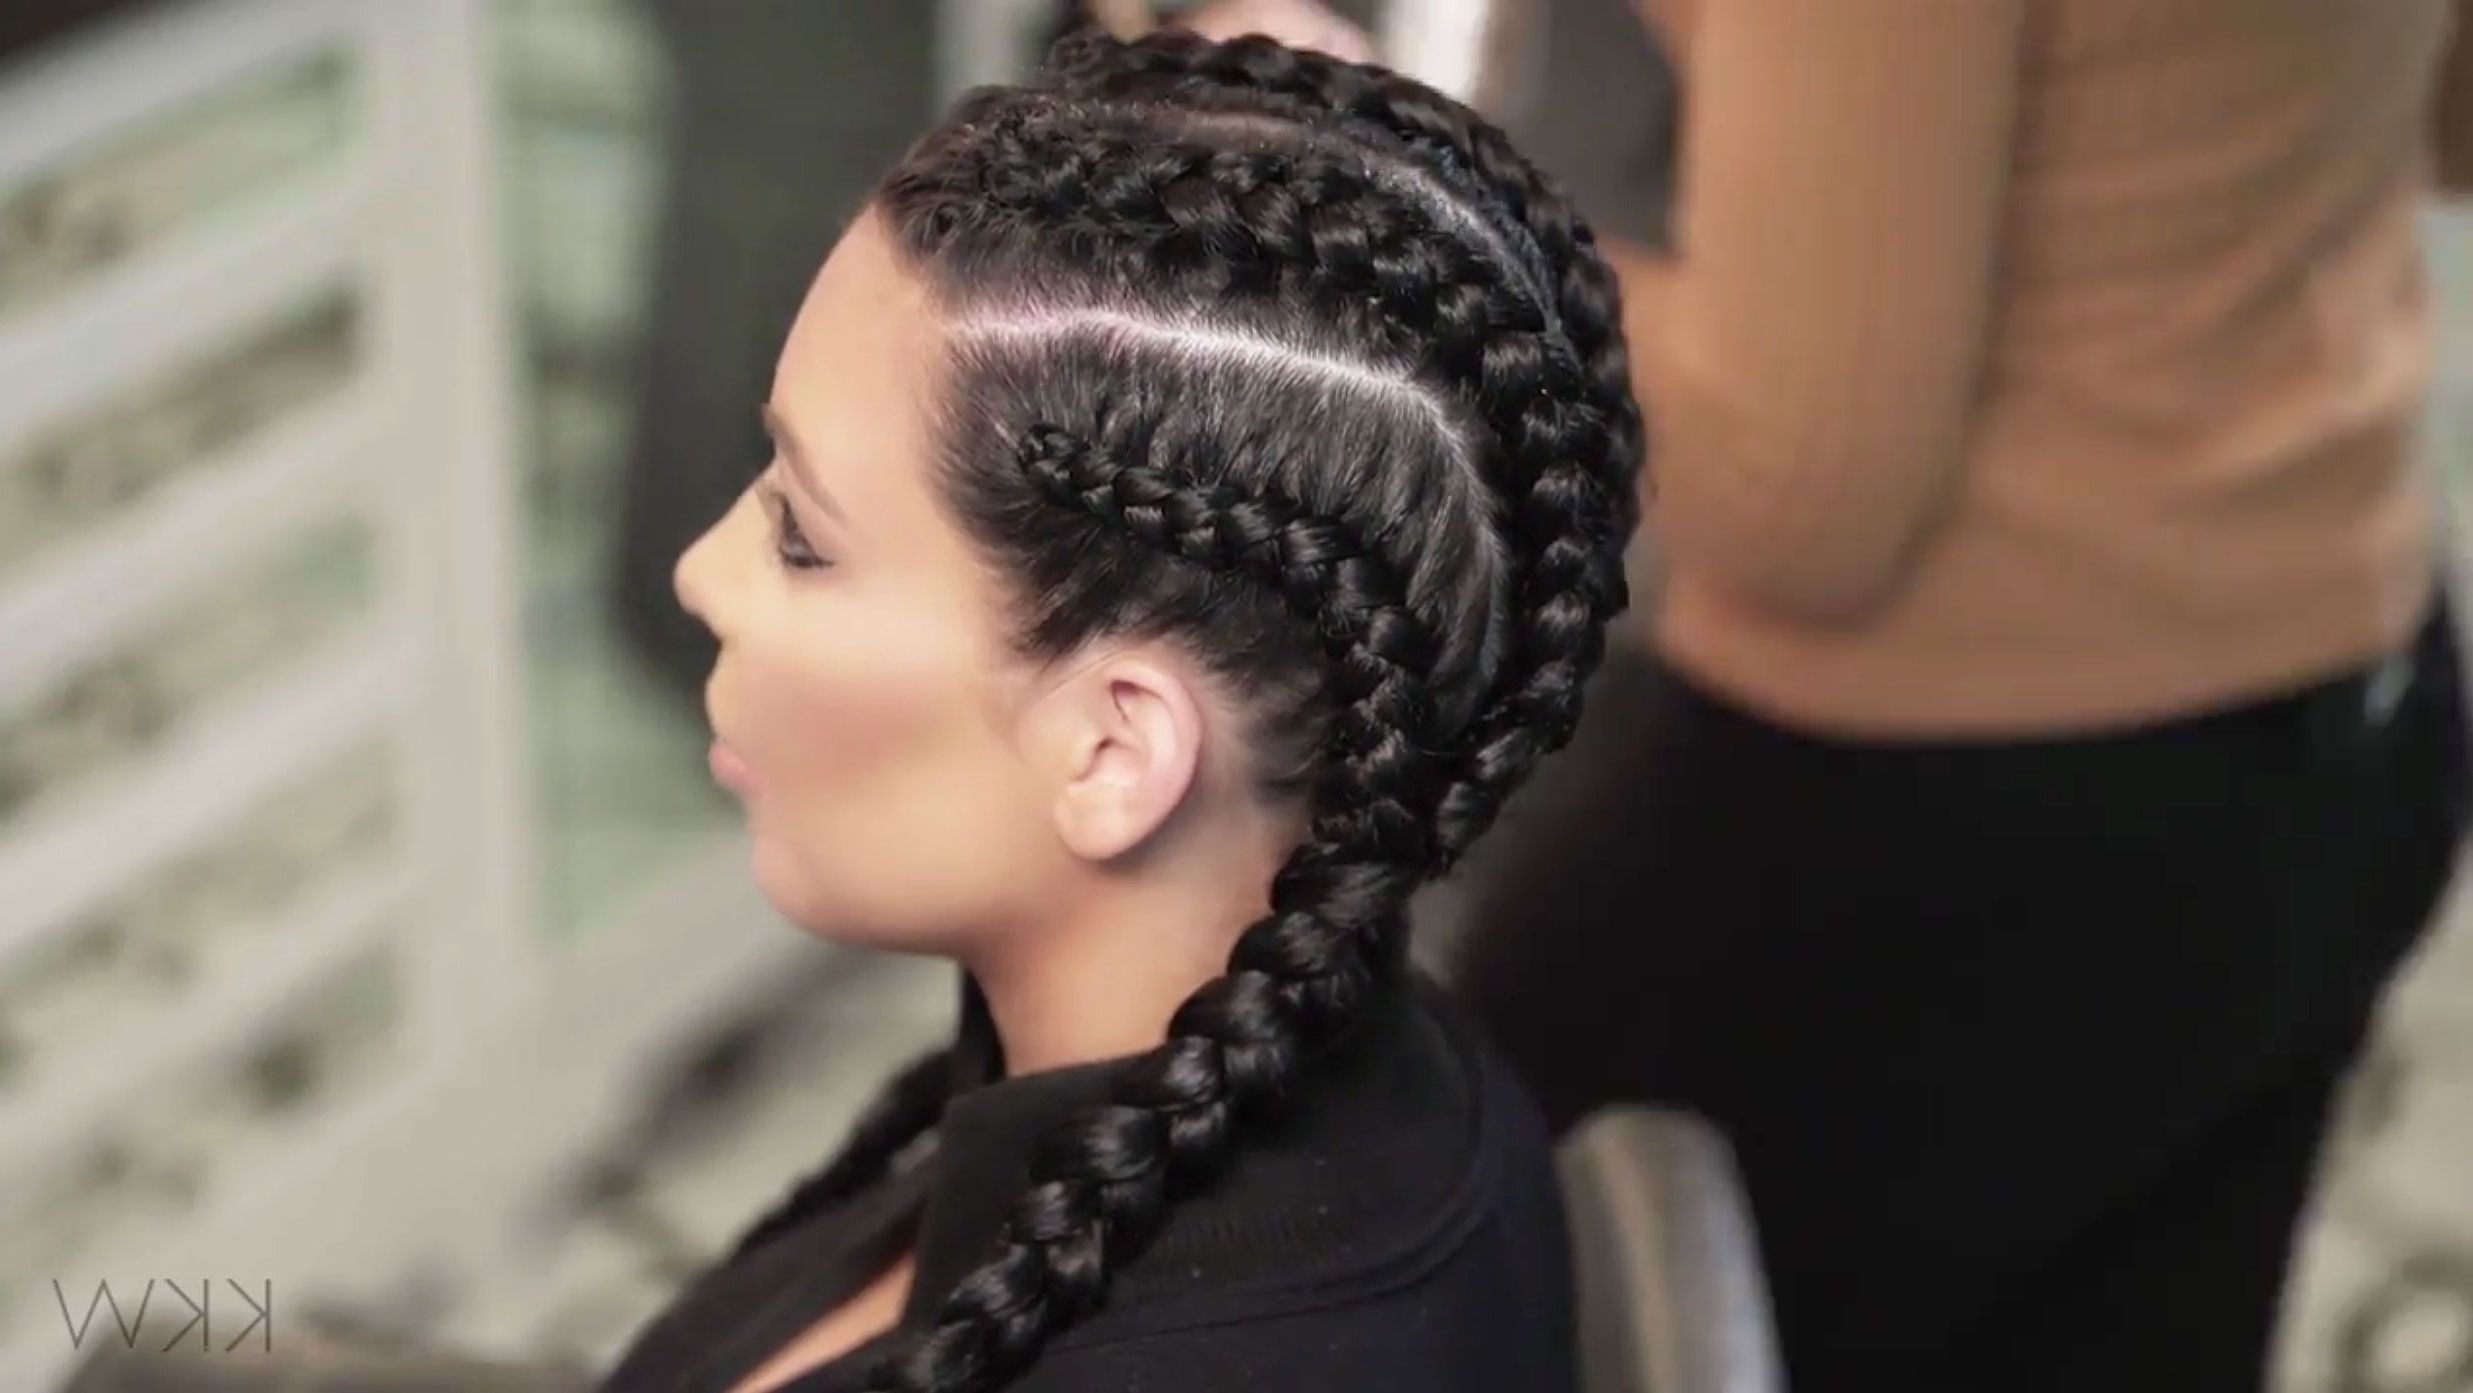 Most Recent Kim Kardashian Braided Hairstyles With Regard To Kim Kardashian Spills The Secret To Her Post Baby Braided Hairstyle (View 3 of 15)